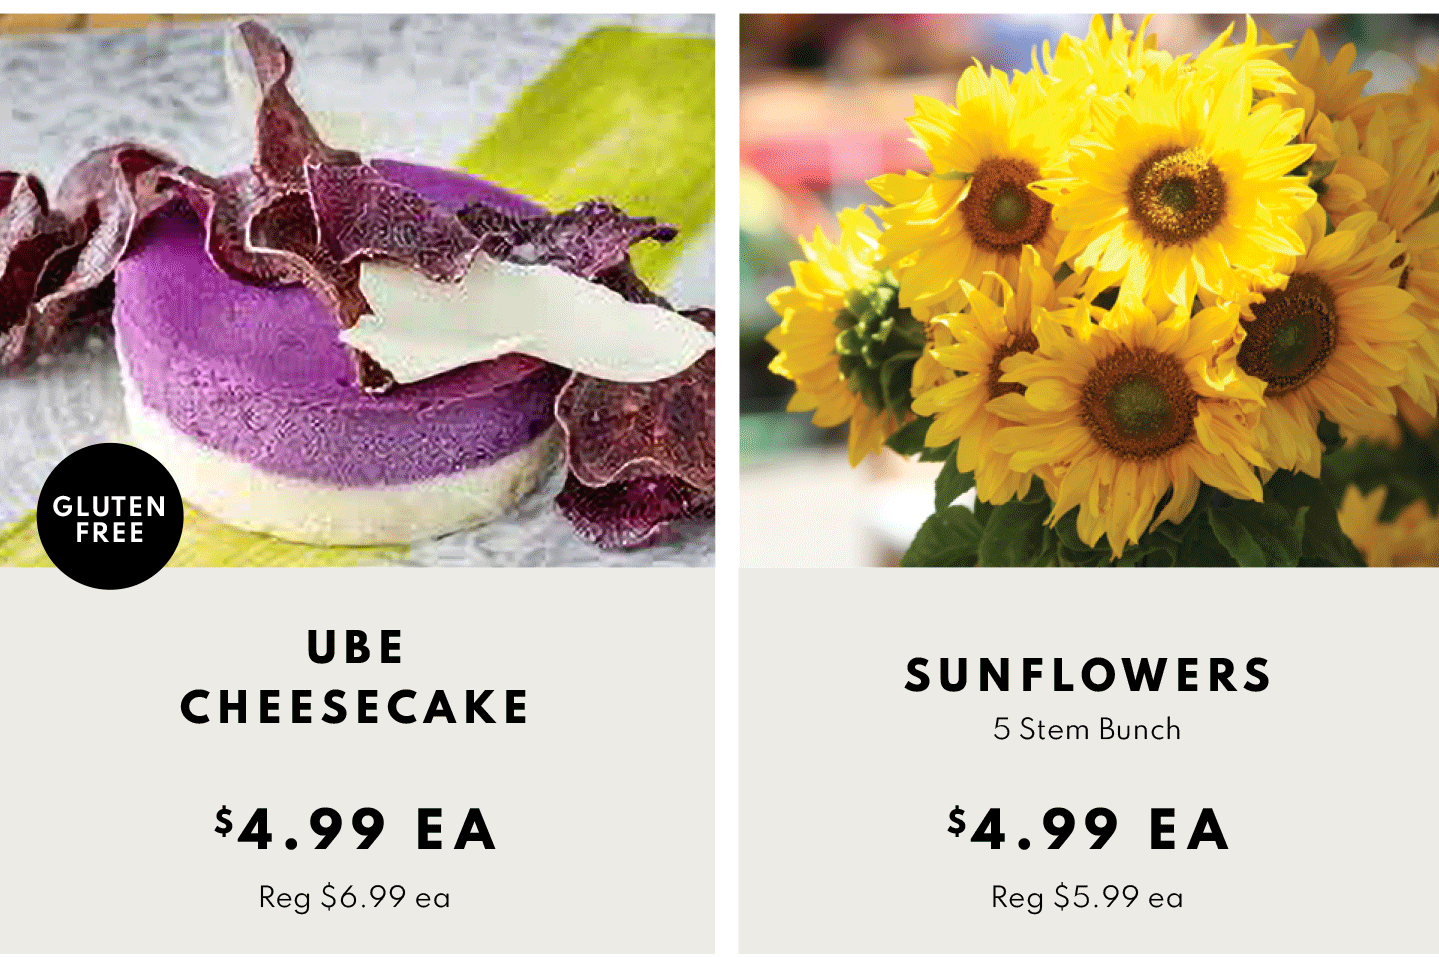 UBe Cheesecake $4.99 ea, Sunfliower 5 stem bunch $4.99 ea